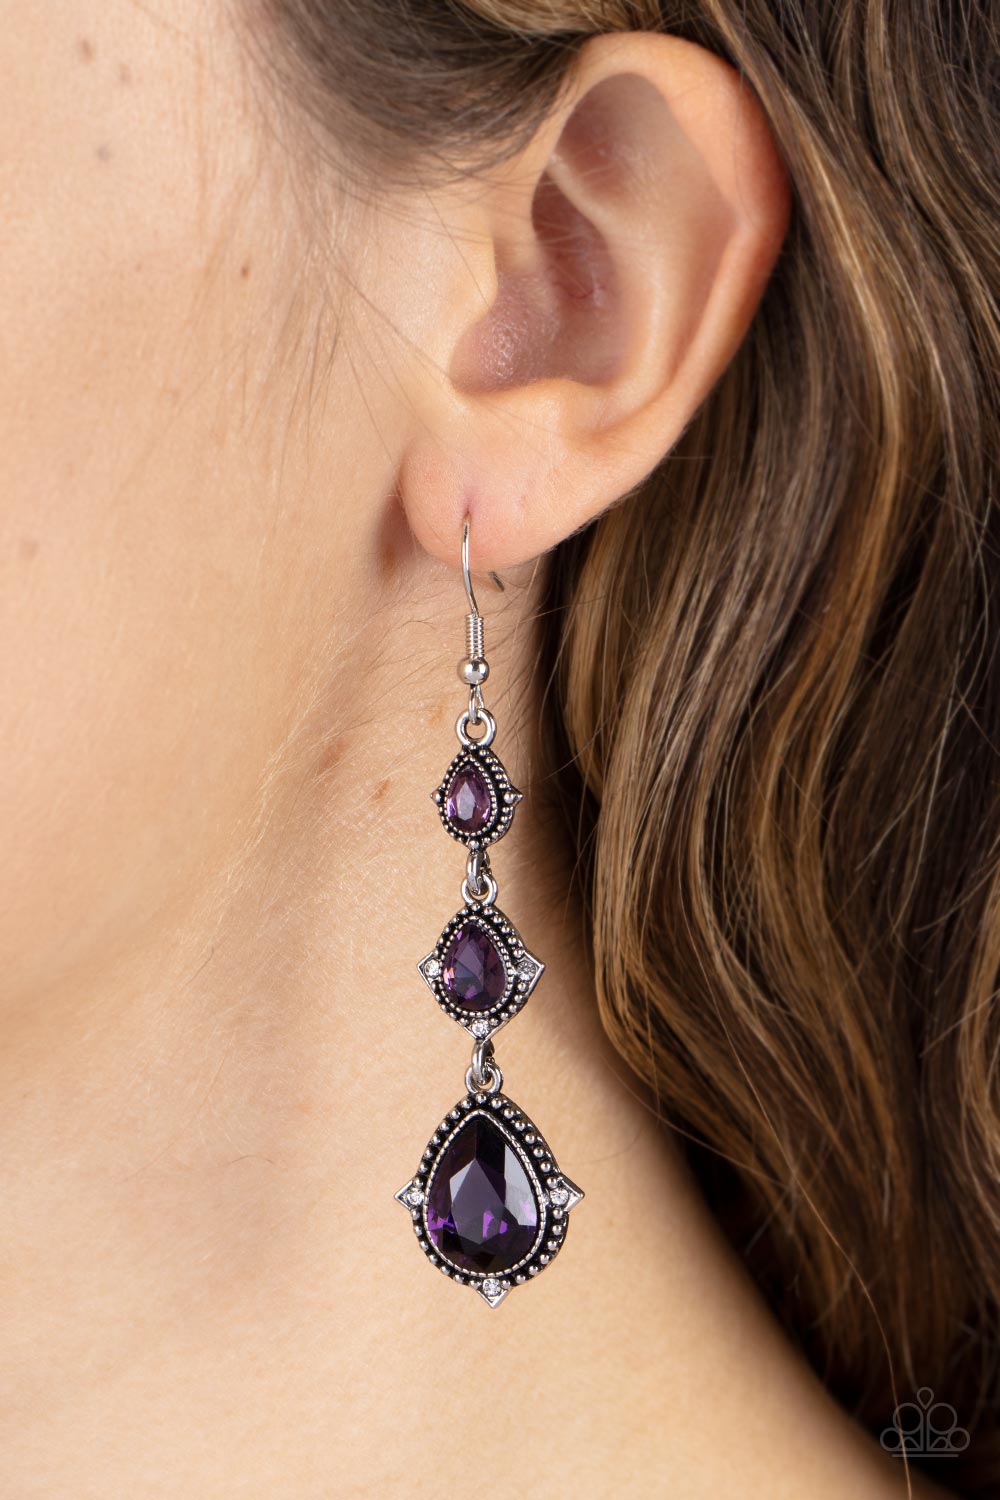 Prague Princess Purple Rhinestone Earrings - Paparazzi Accessories-on model - CarasShop.com - $5 Jewelry by Cara Jewels